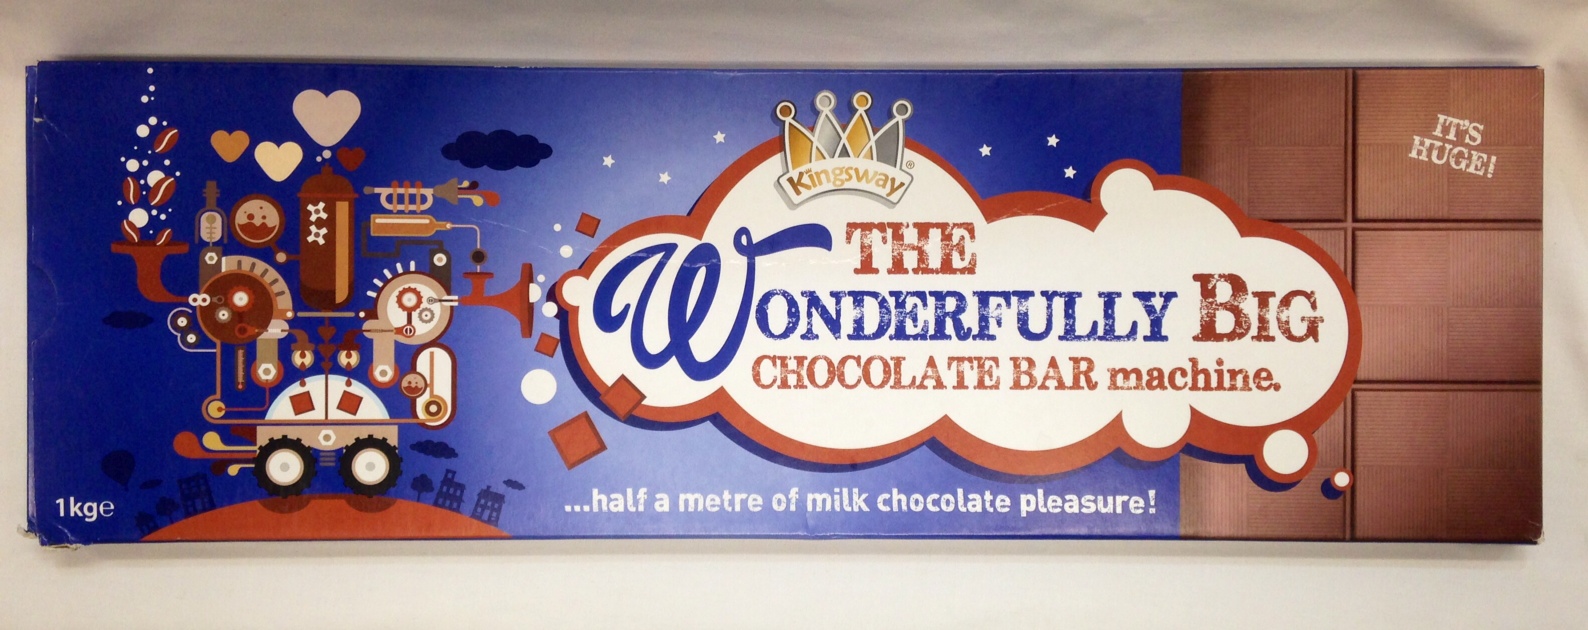 Huge Chocolate Bar